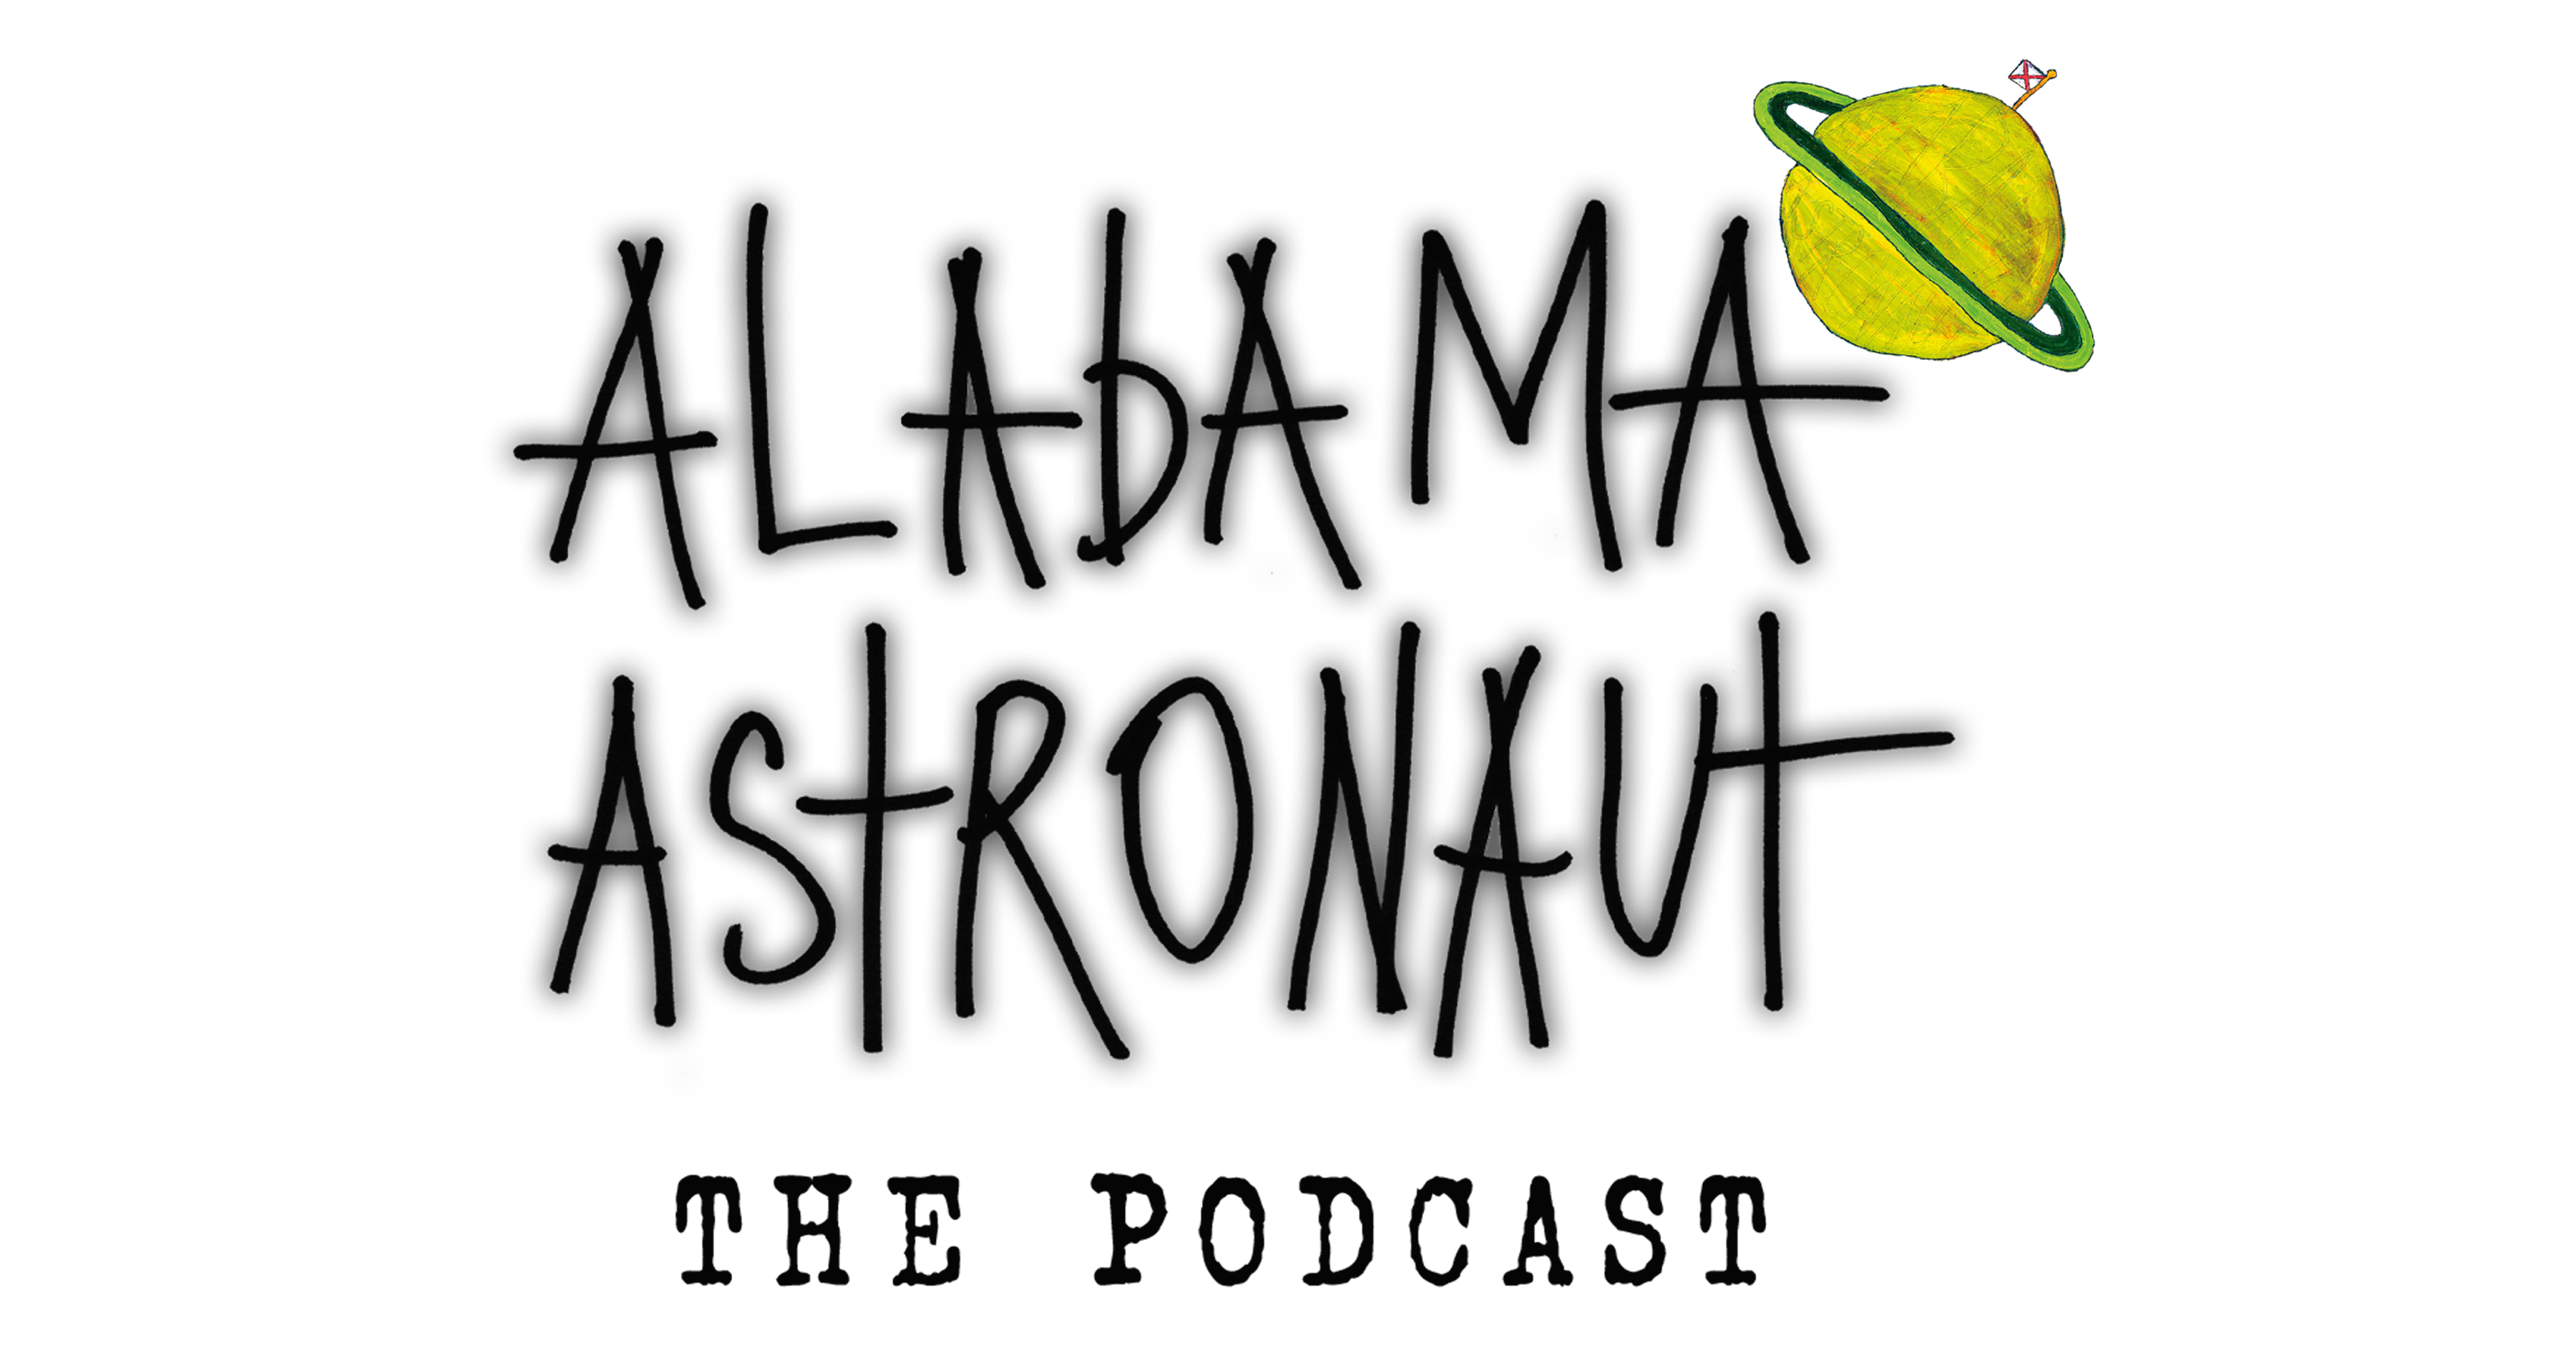 Alabama Astronaut: The Podcast